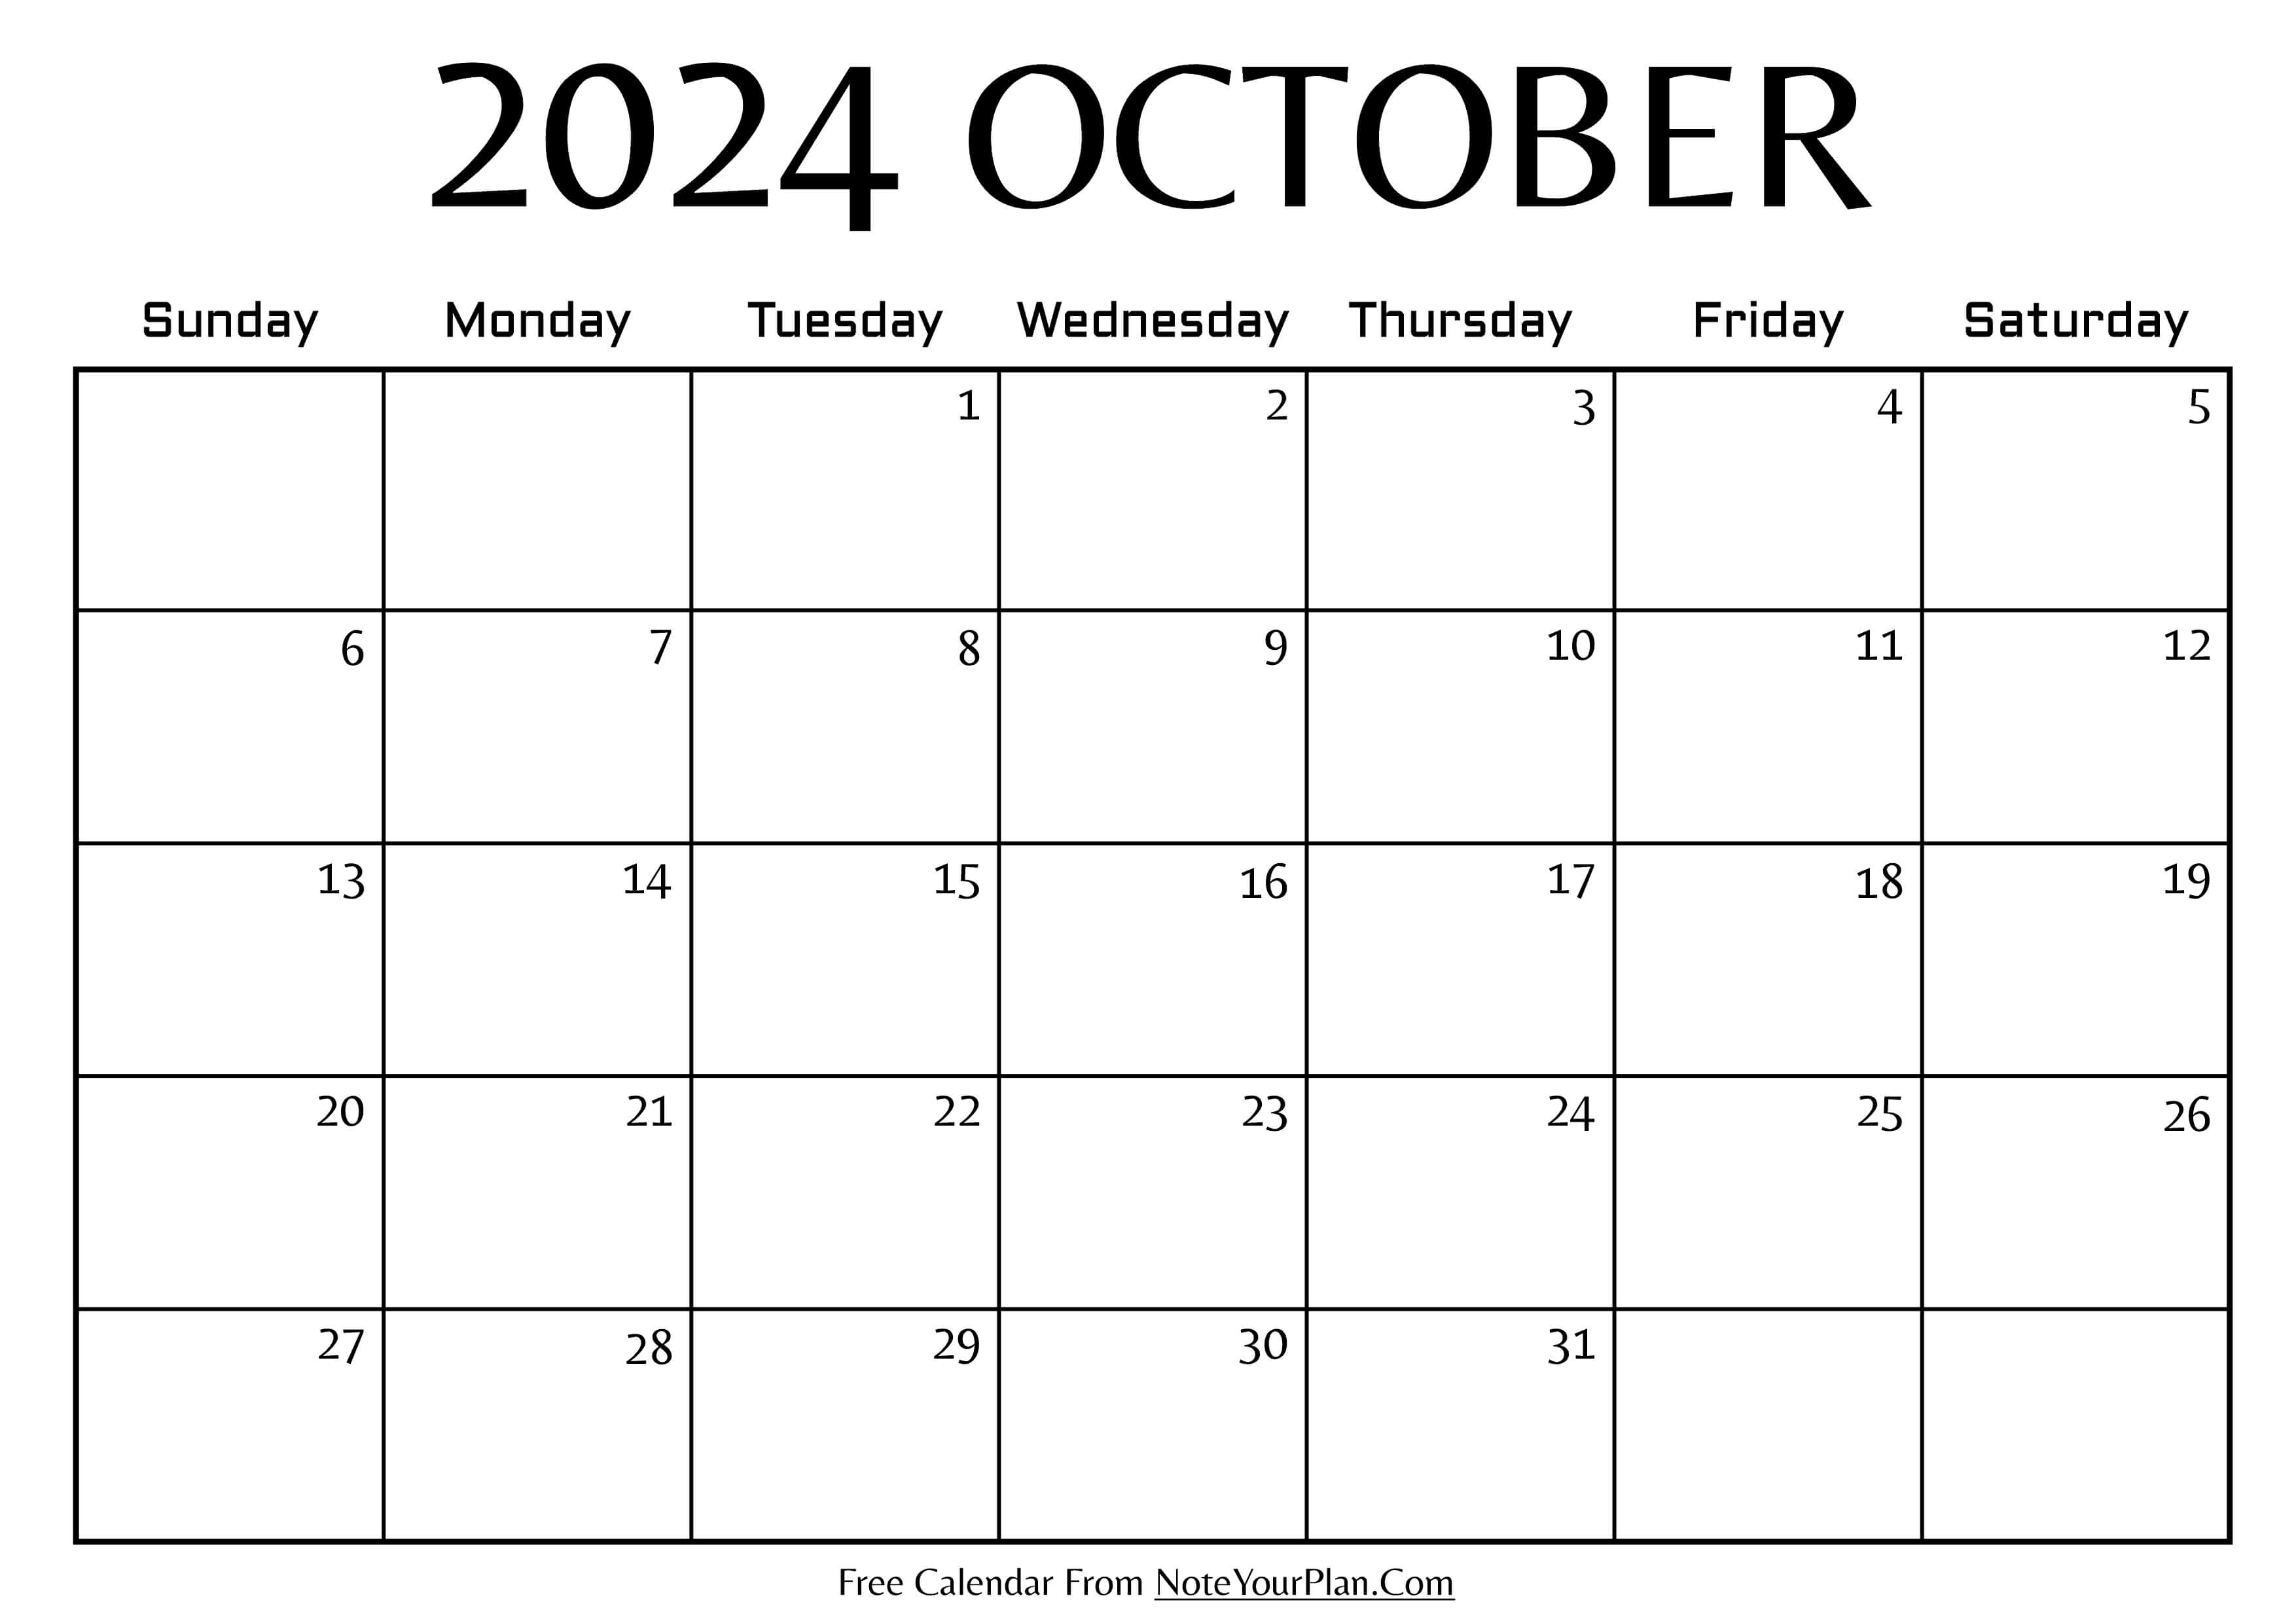 October 2024 Calendar Template